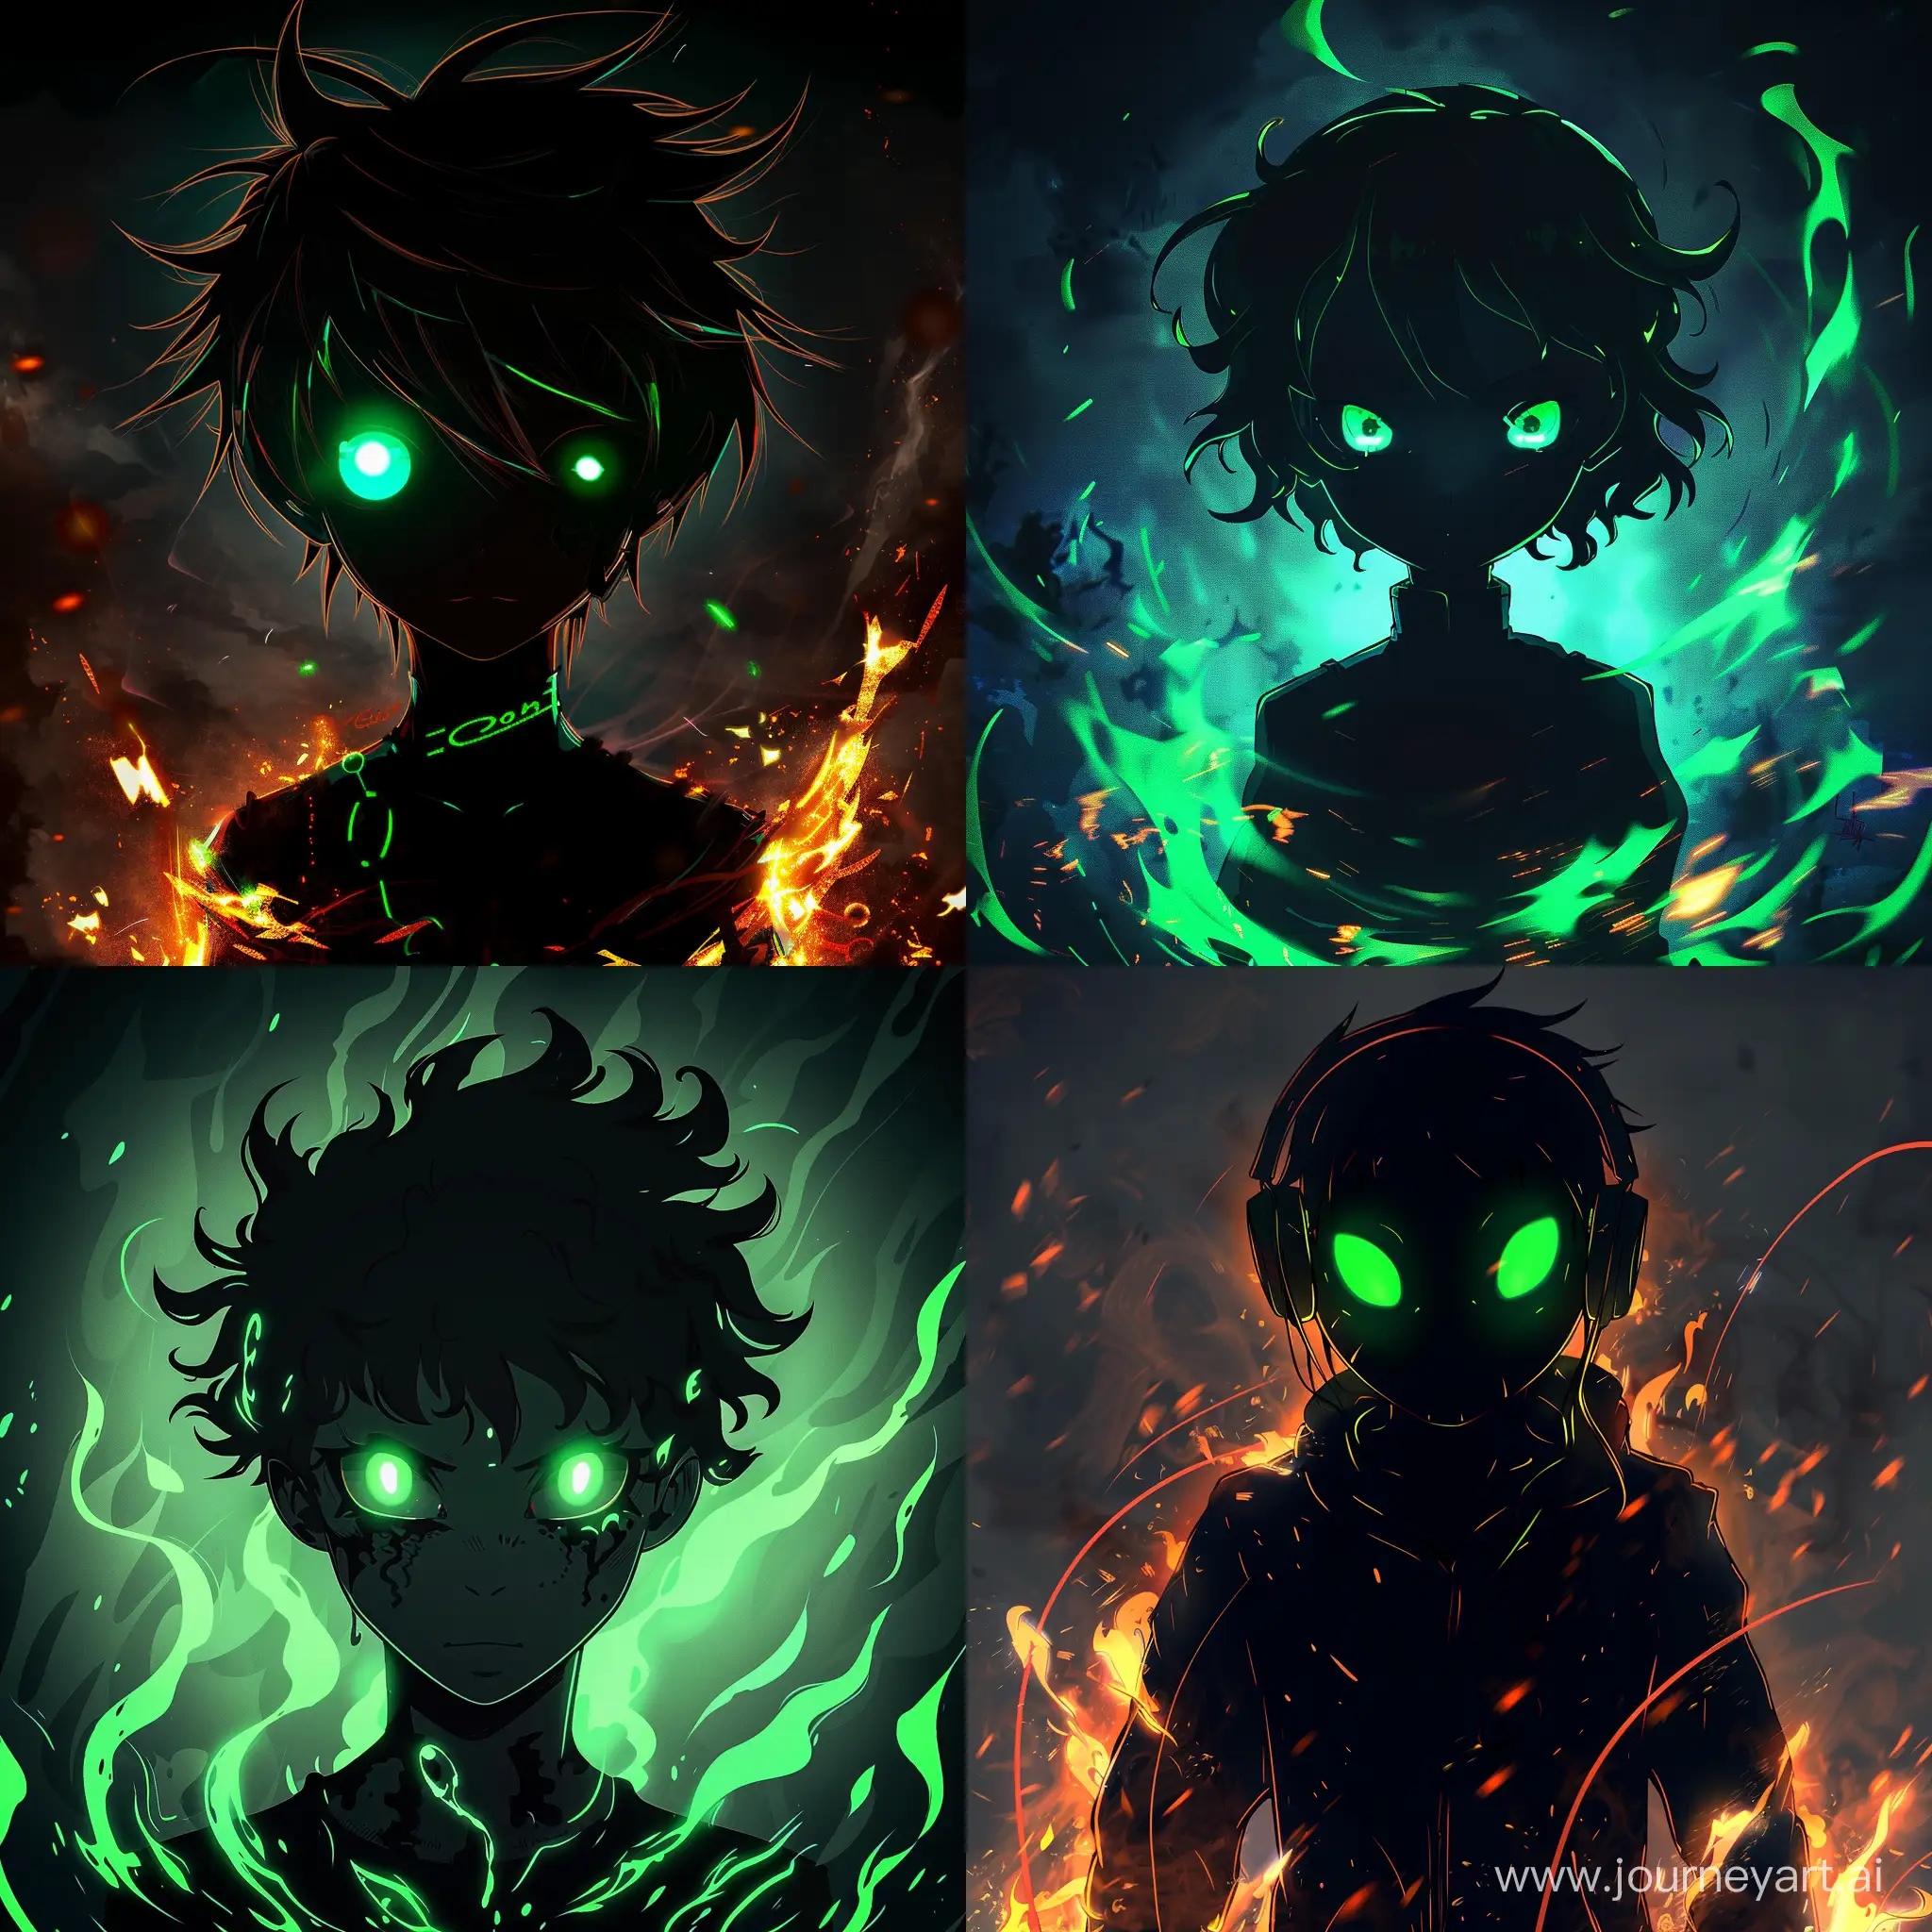 Dark anime dark silhouette, Brazilian phonk music artwork, glowing green eyes and flames around the character